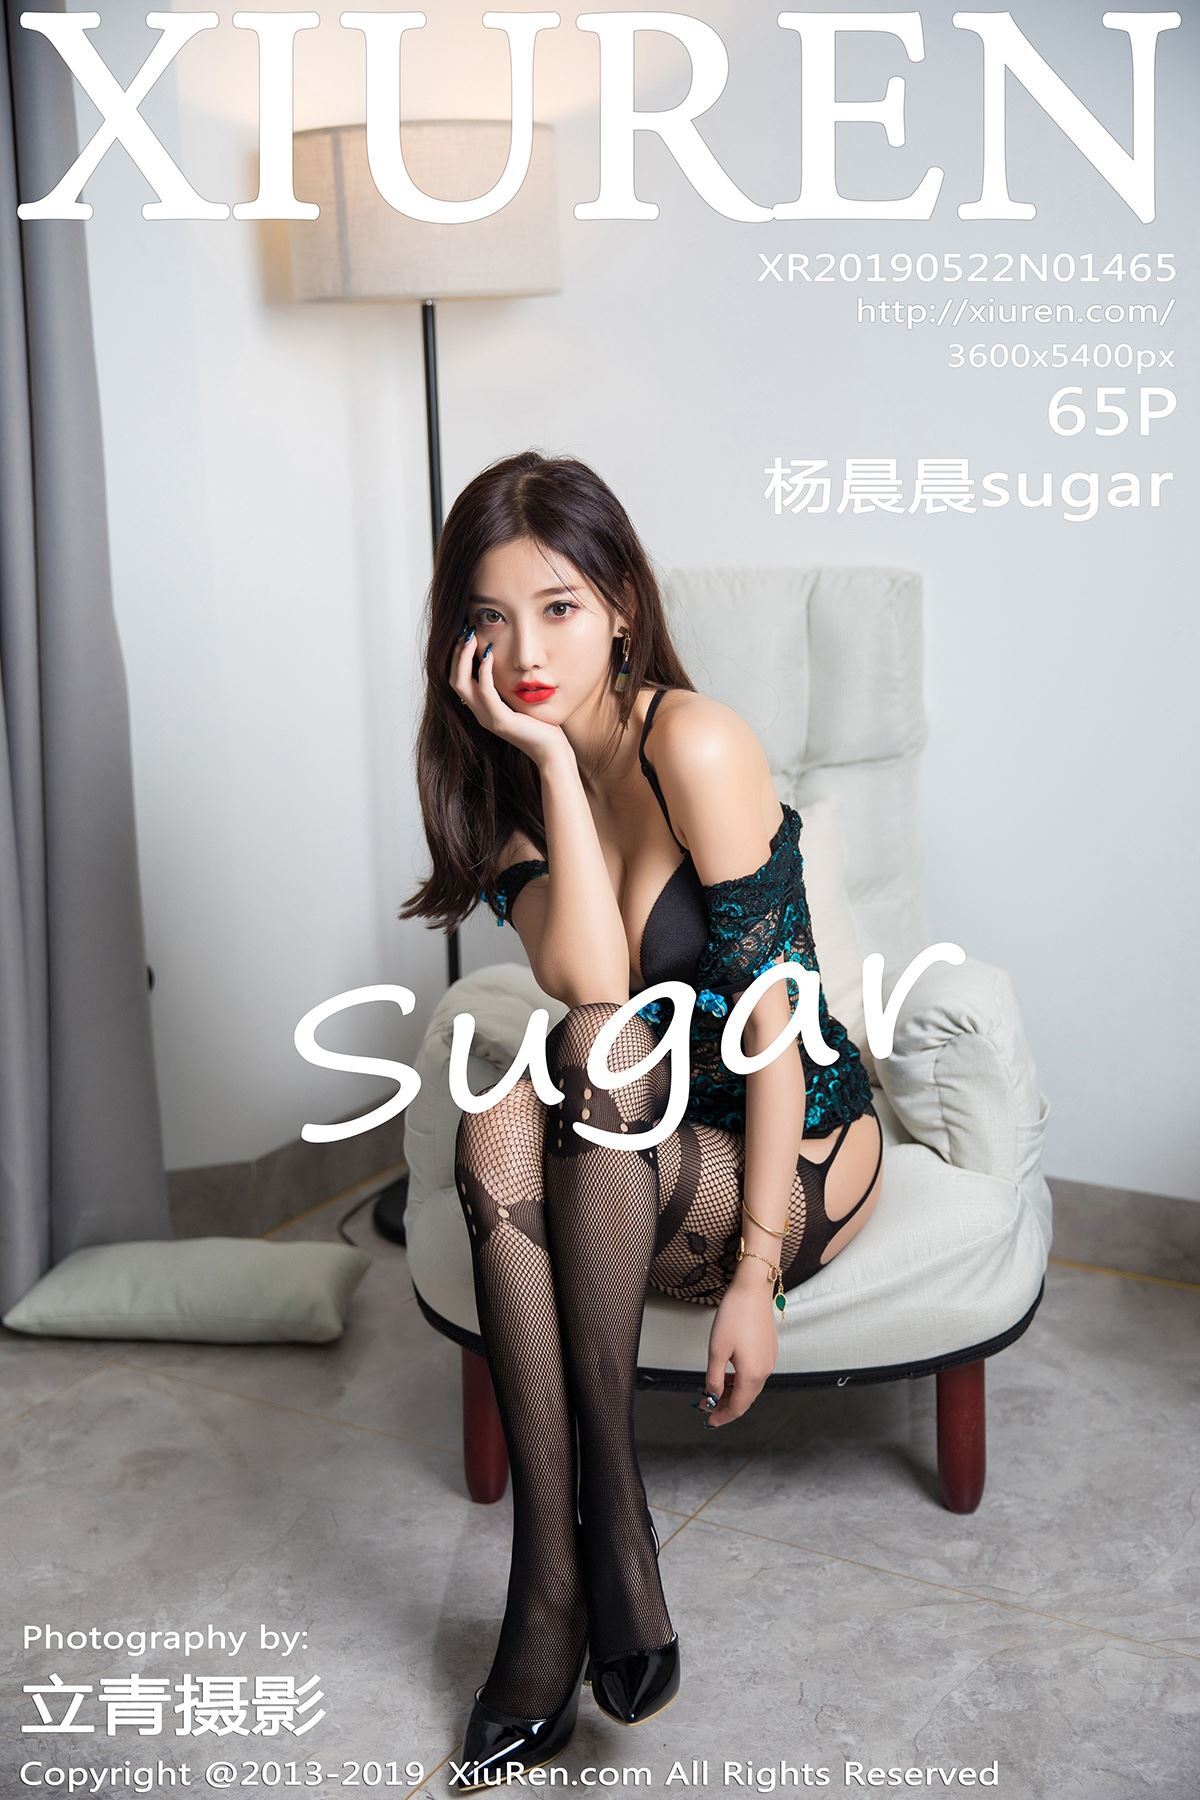 [xiuren.com] May 22, 2019 no.1465 Yang Chenchen sugar